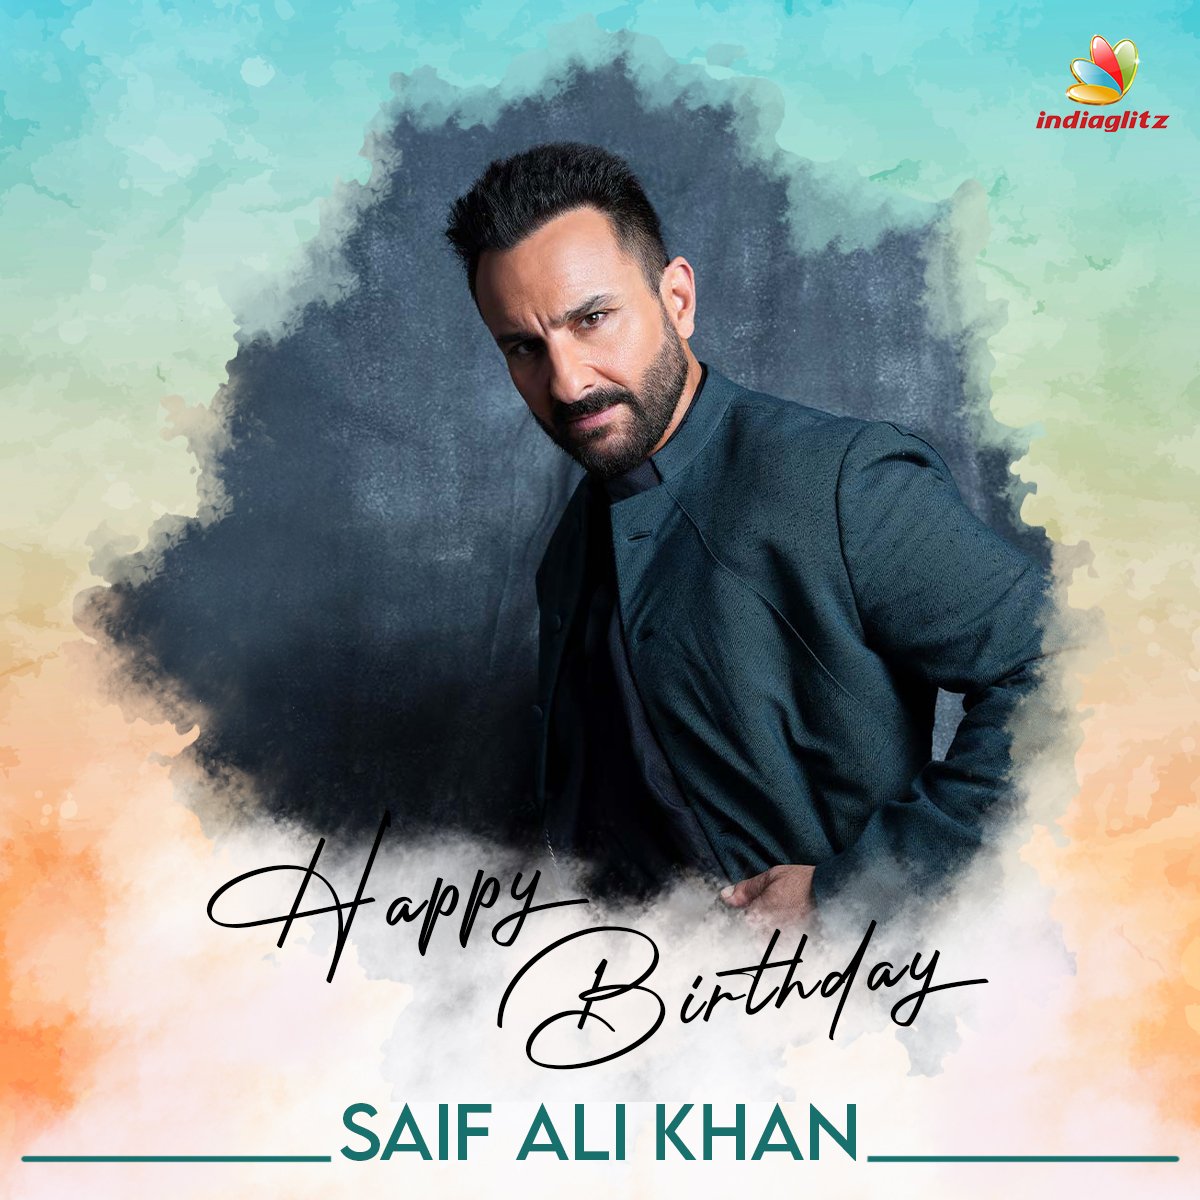 Wishing Actor Saif Ali Khan a Very Happy Birthday   